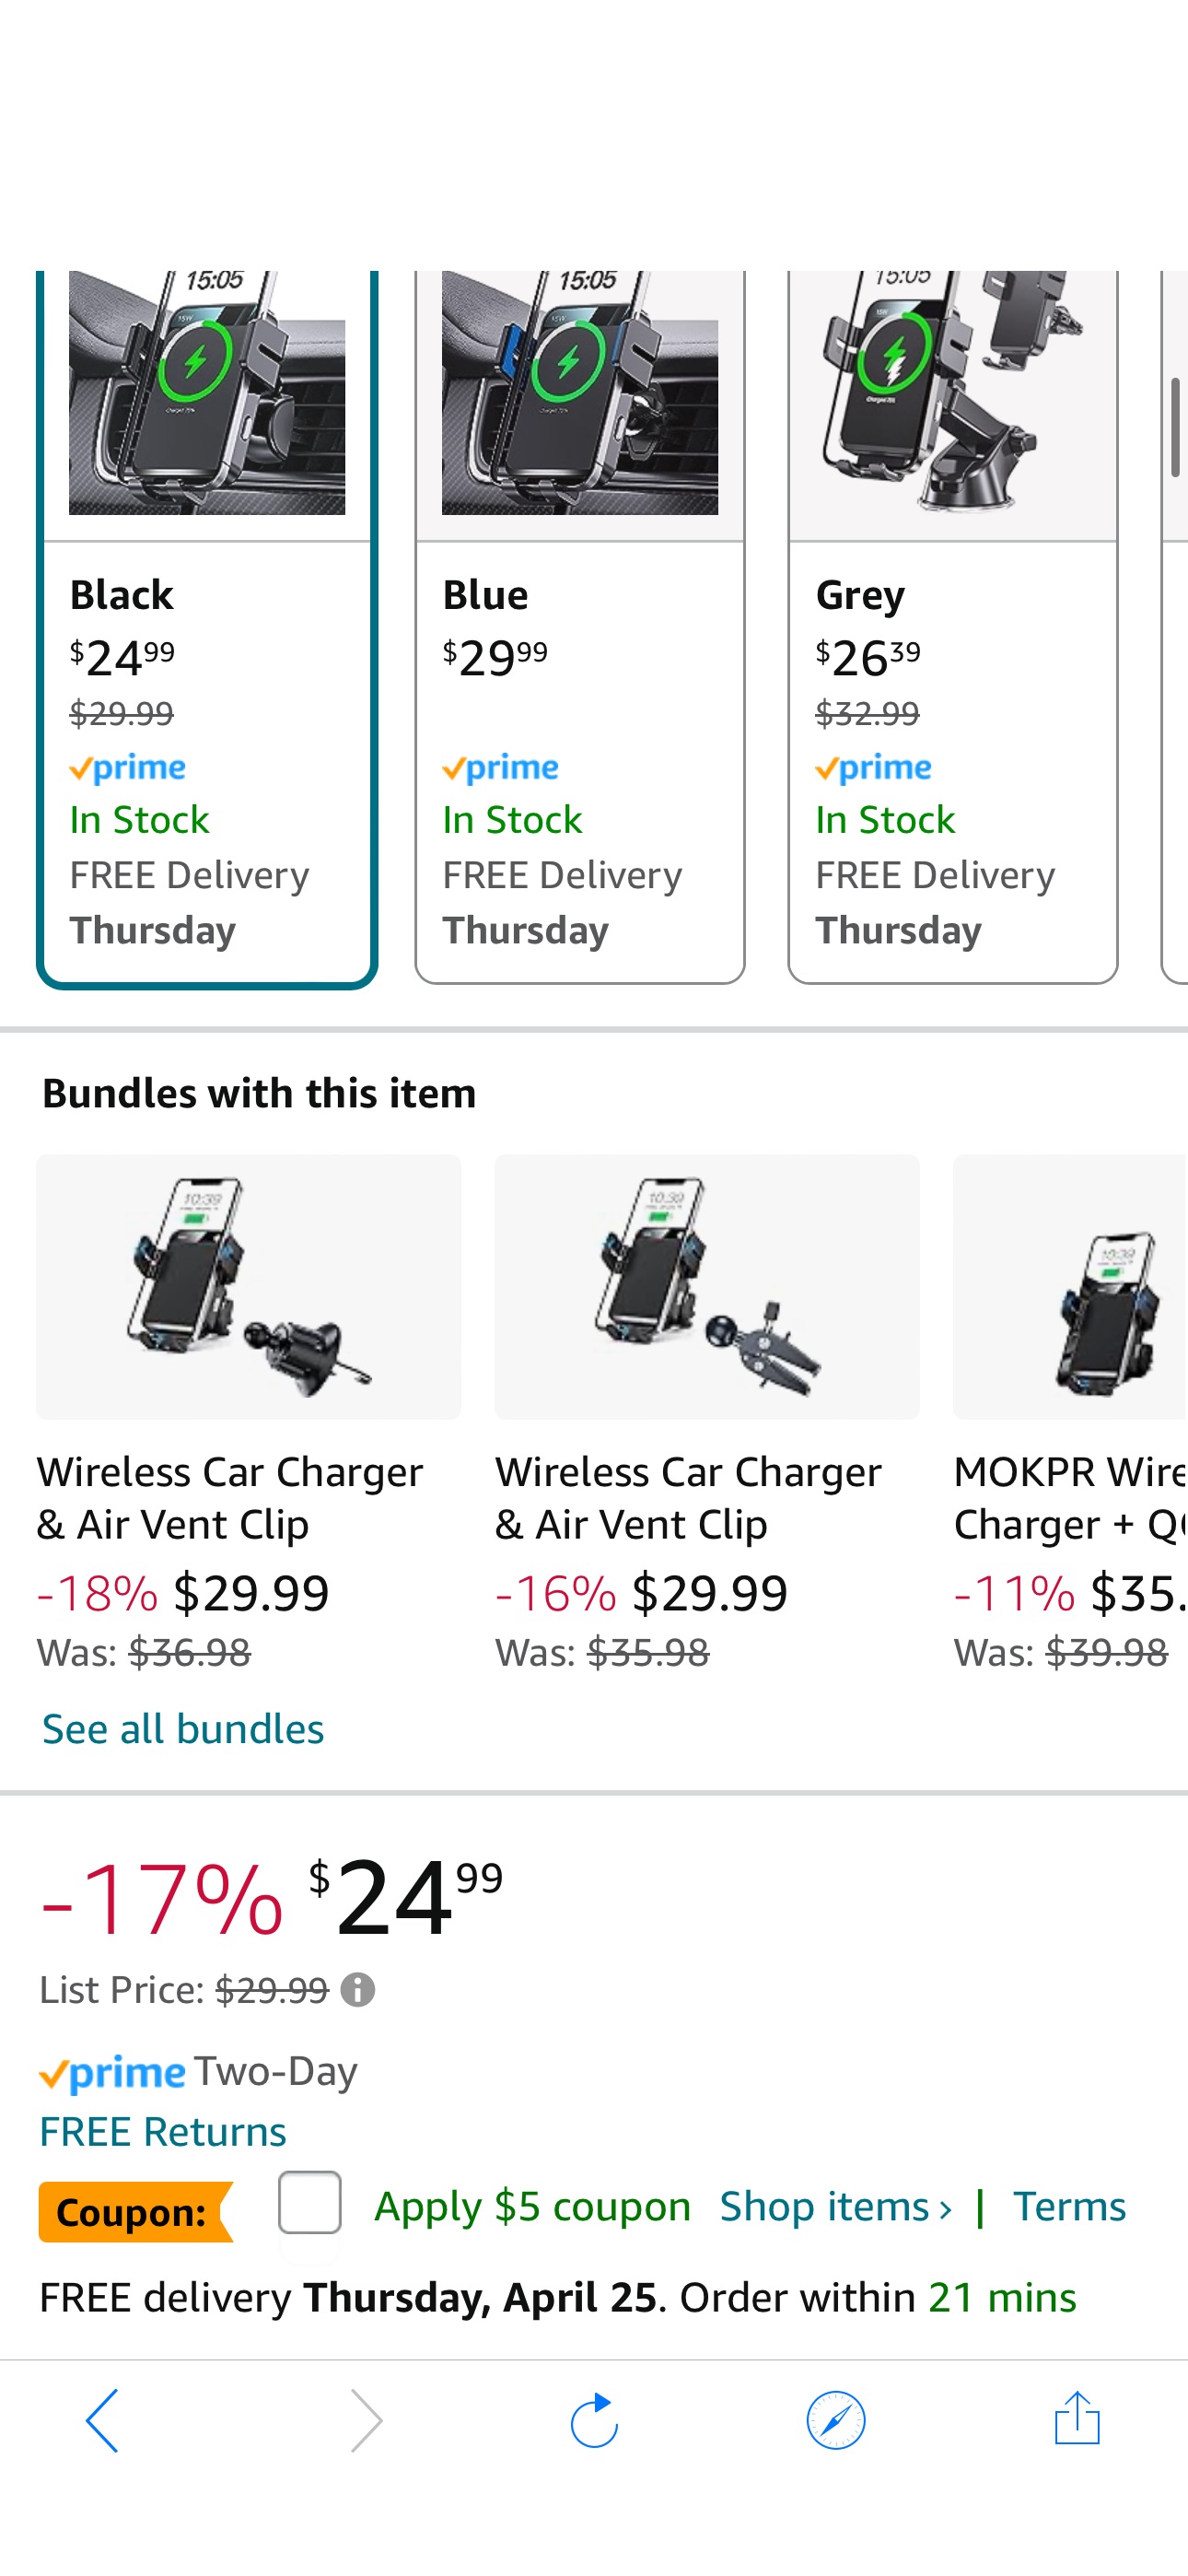 Save 50% with promo code 50LQDUCY | Amazon.com clip coupon